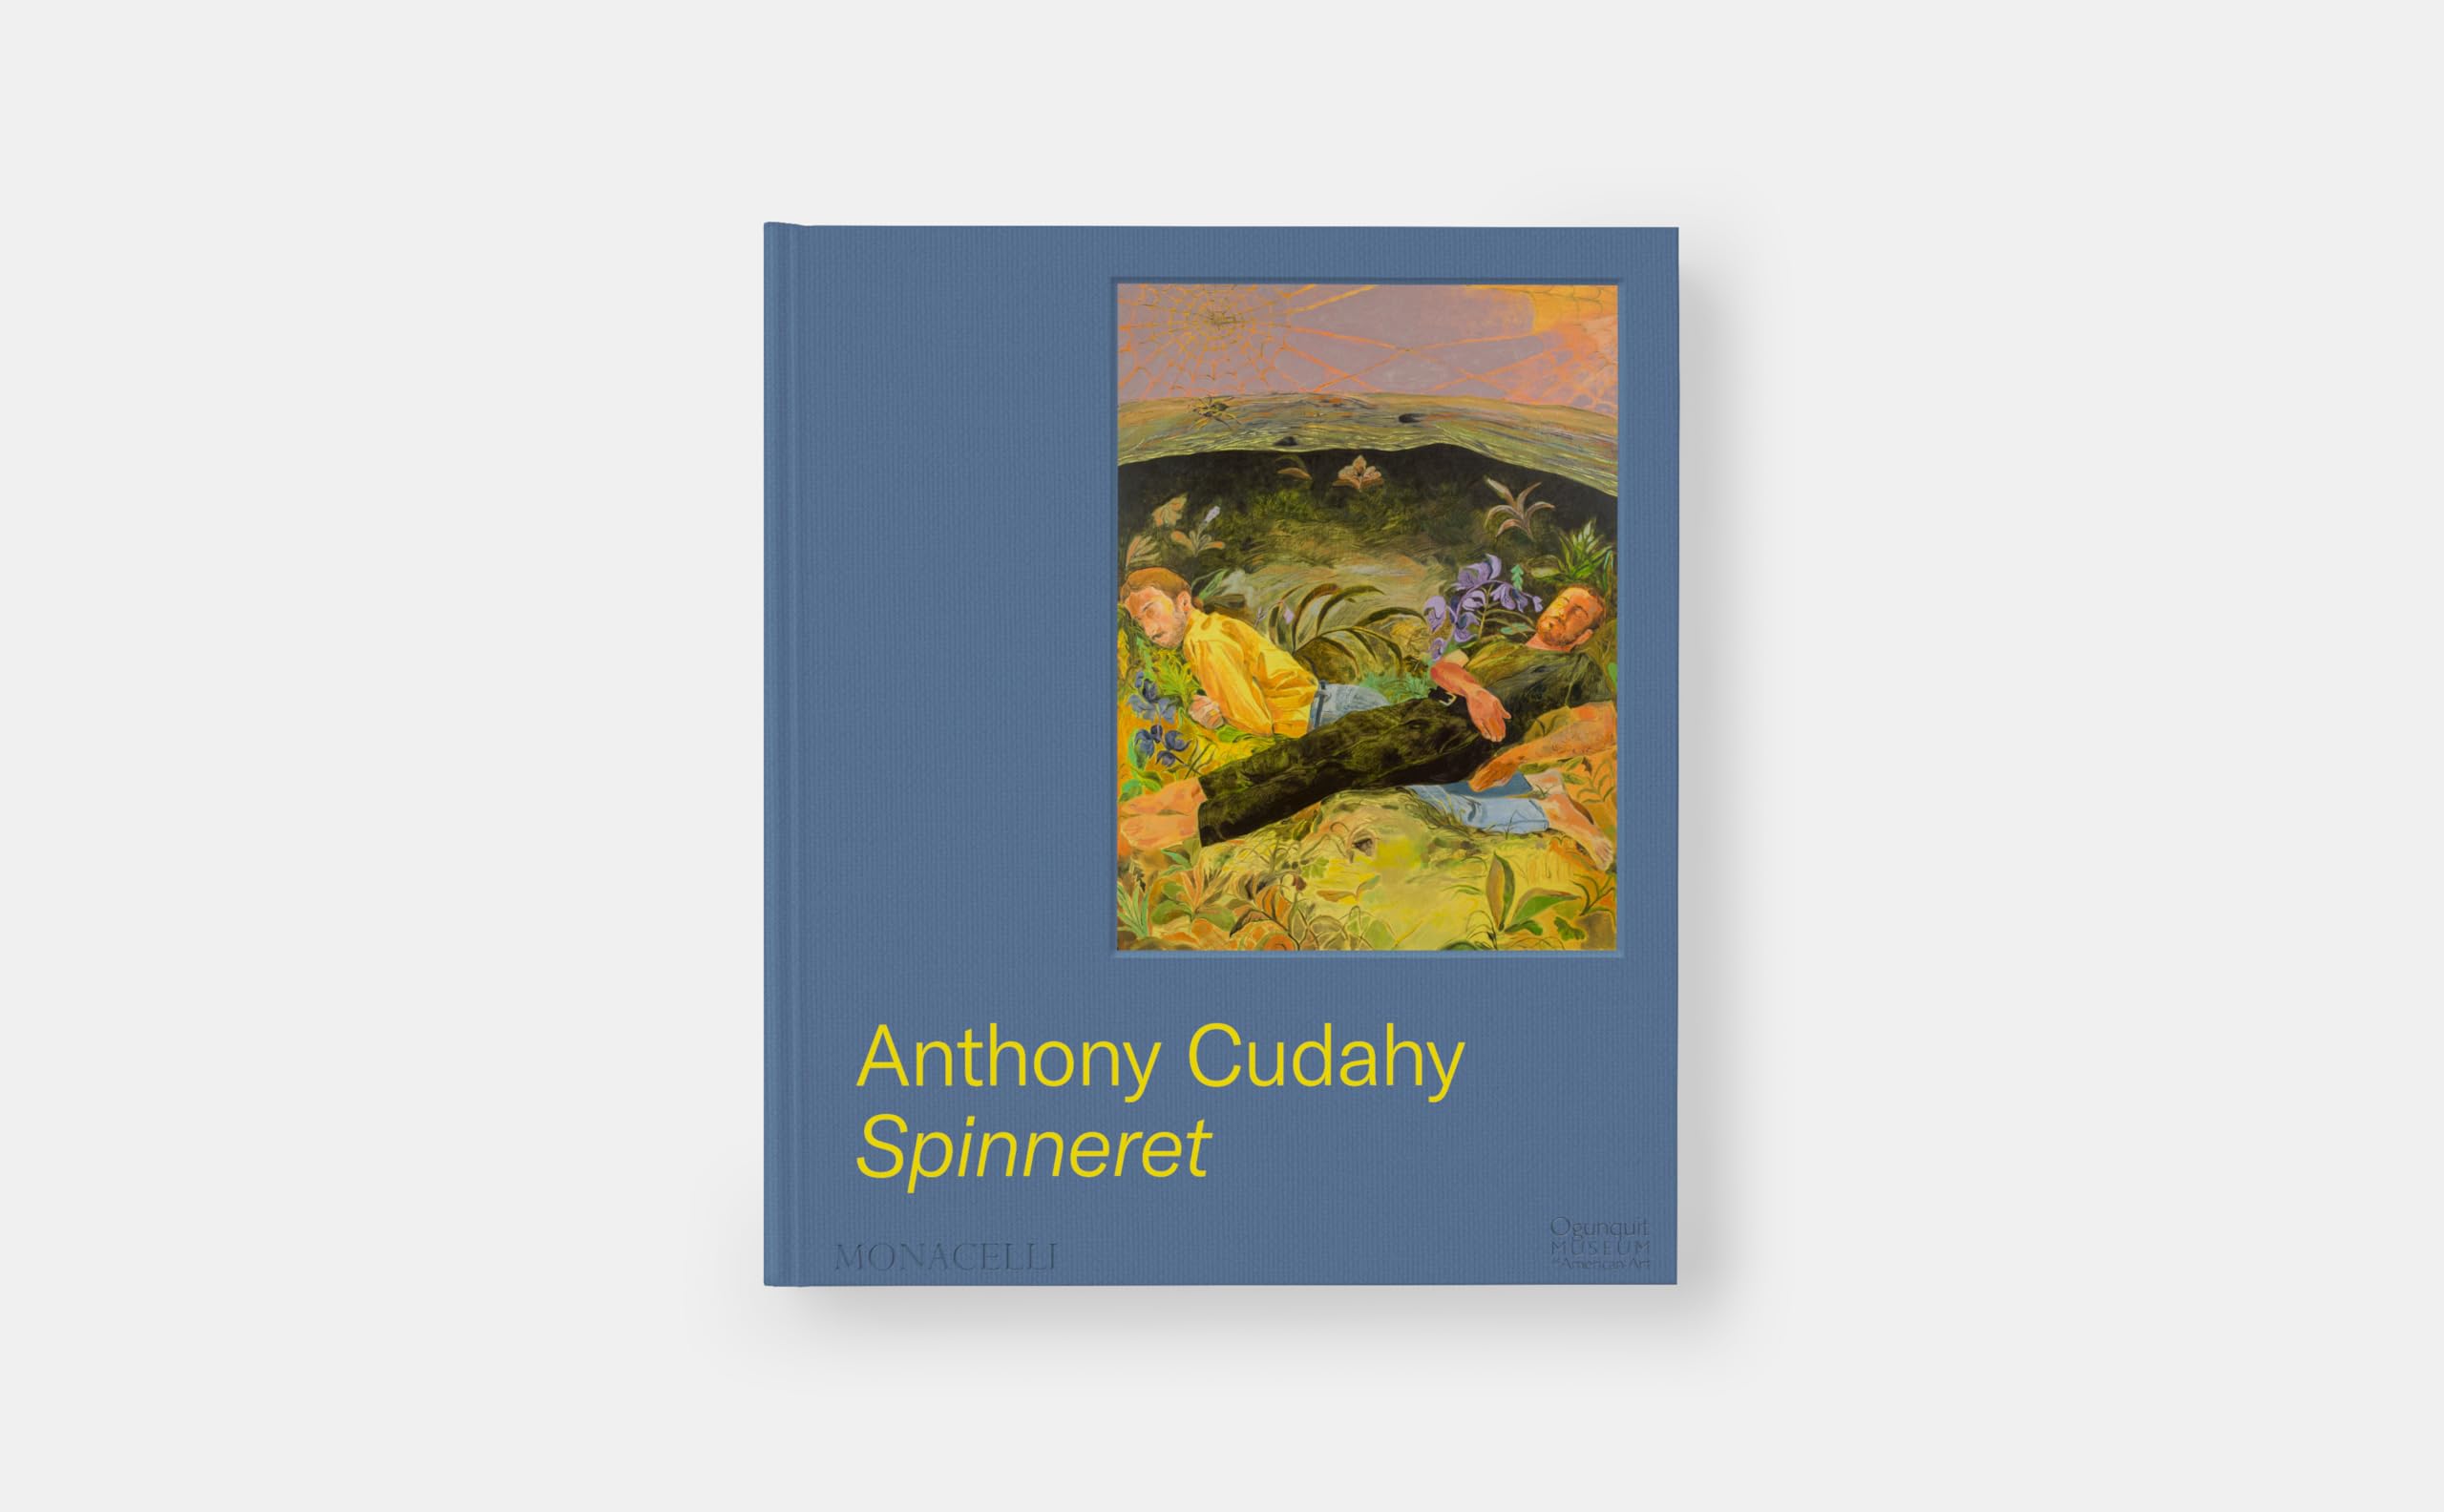 Anthony Cudahy: Spinneret